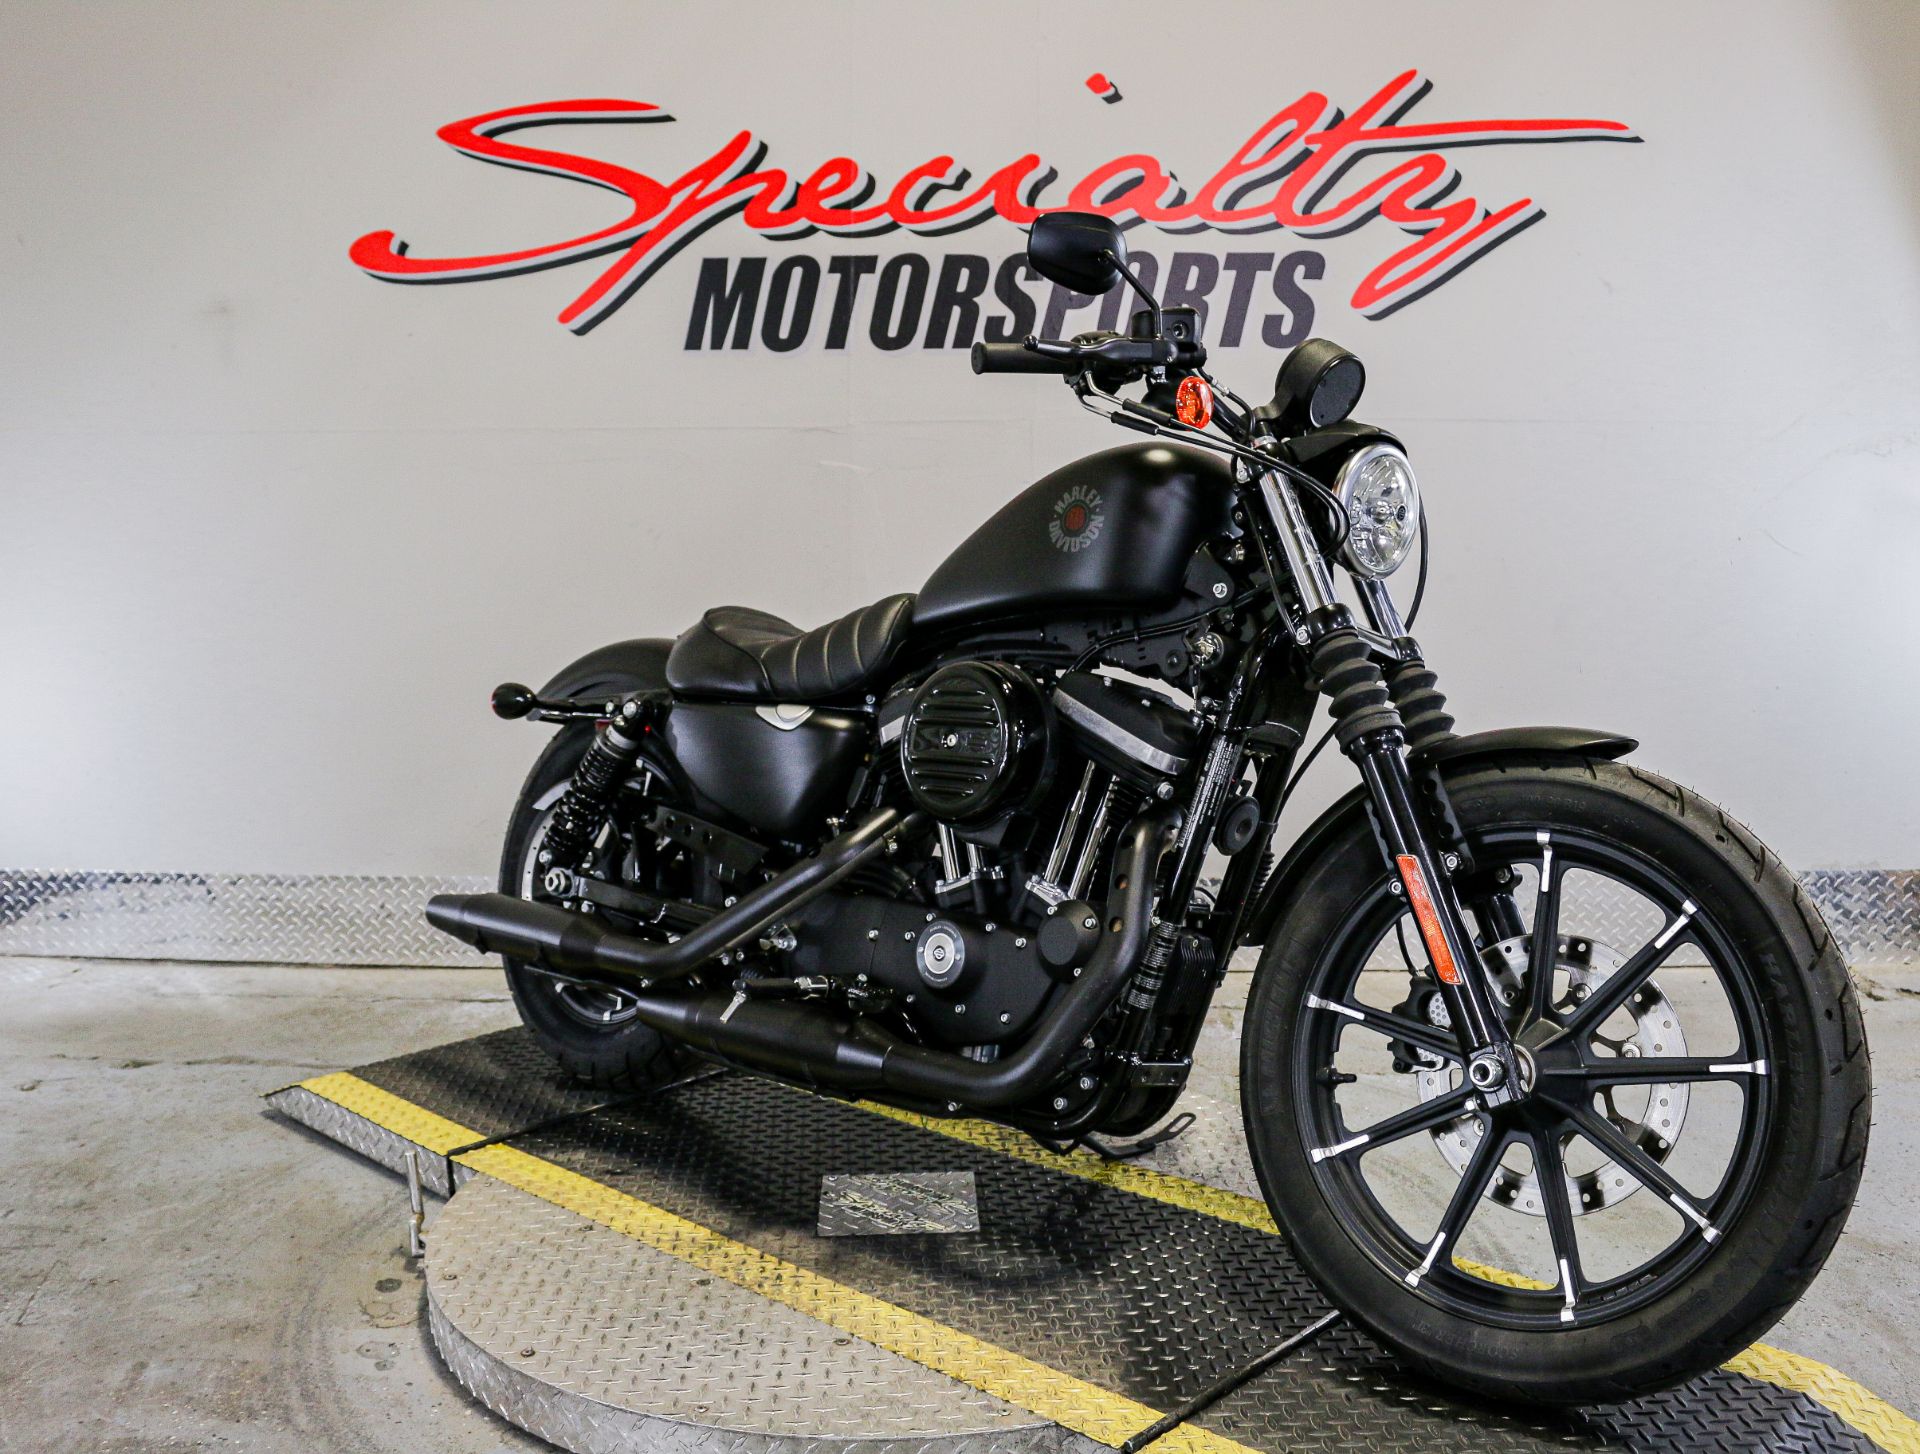 2021 Harley-Davidson Iron 883™ in Sacramento, California - Photo 7